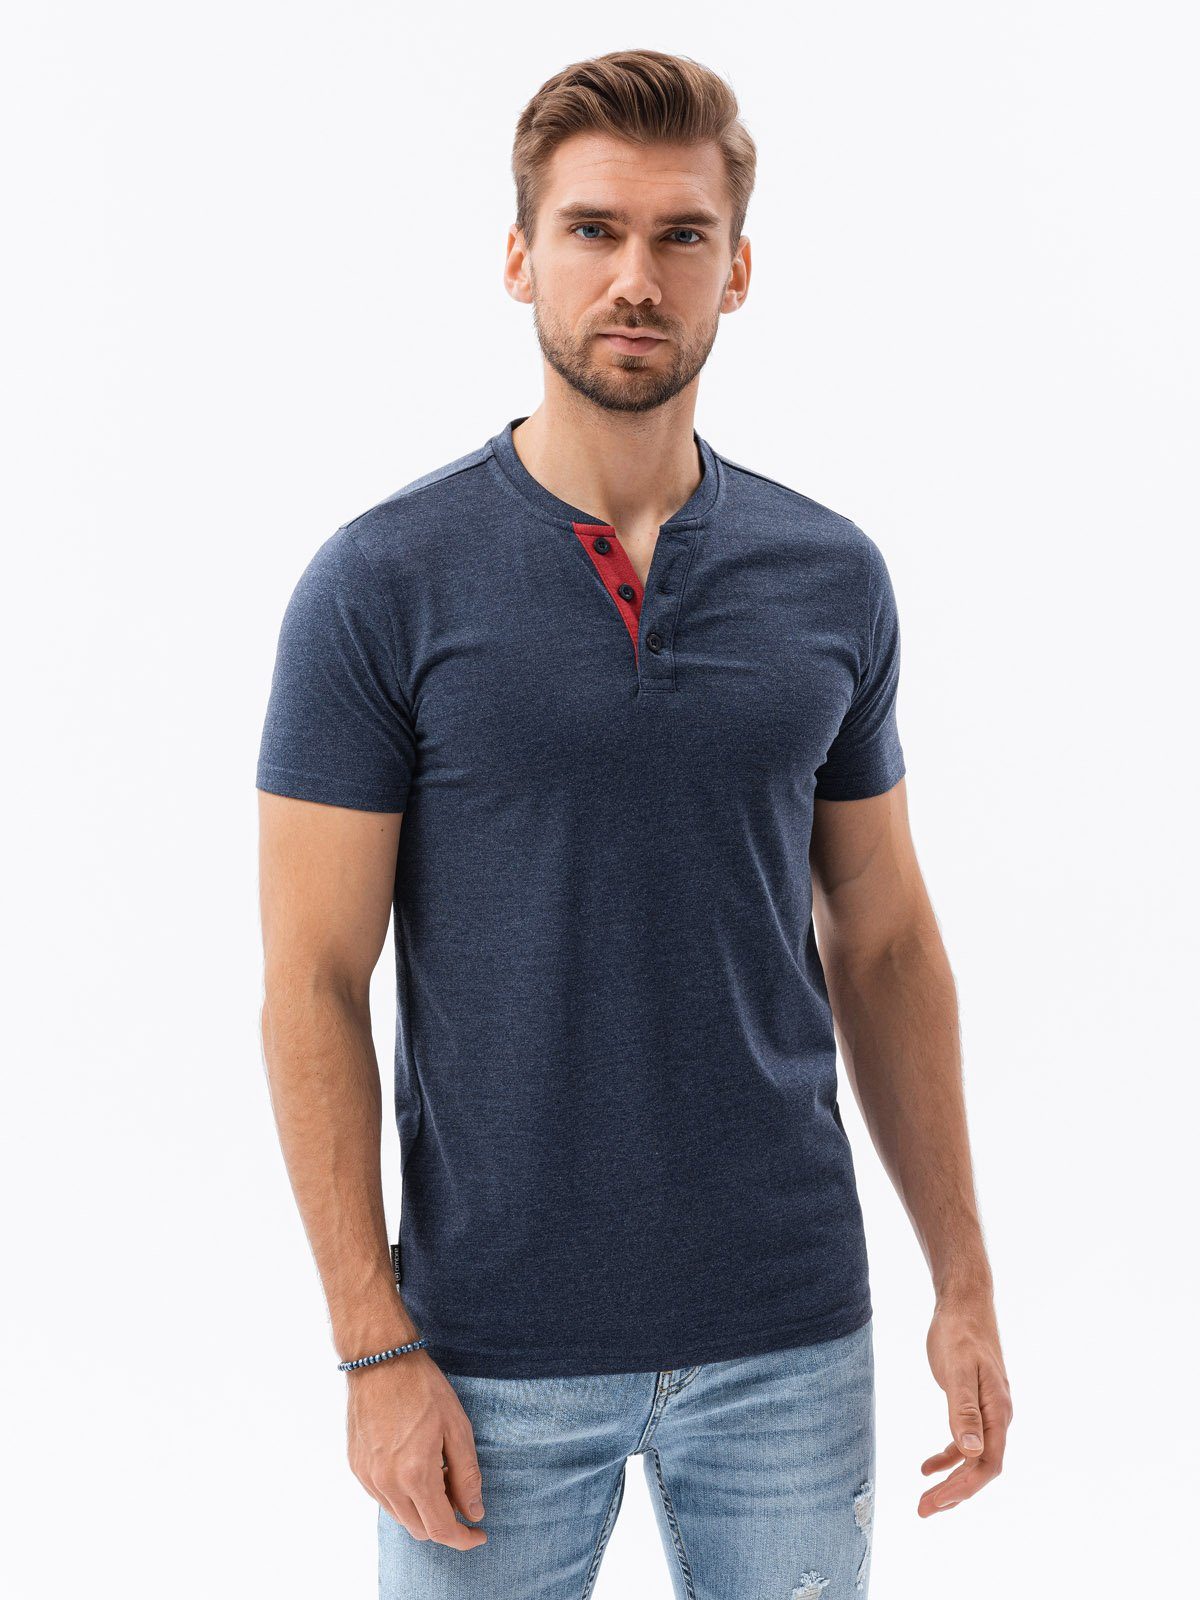 OMBRE T-Shirt L marineblau Unifarbenes Herren-T-Shirt S1390 -